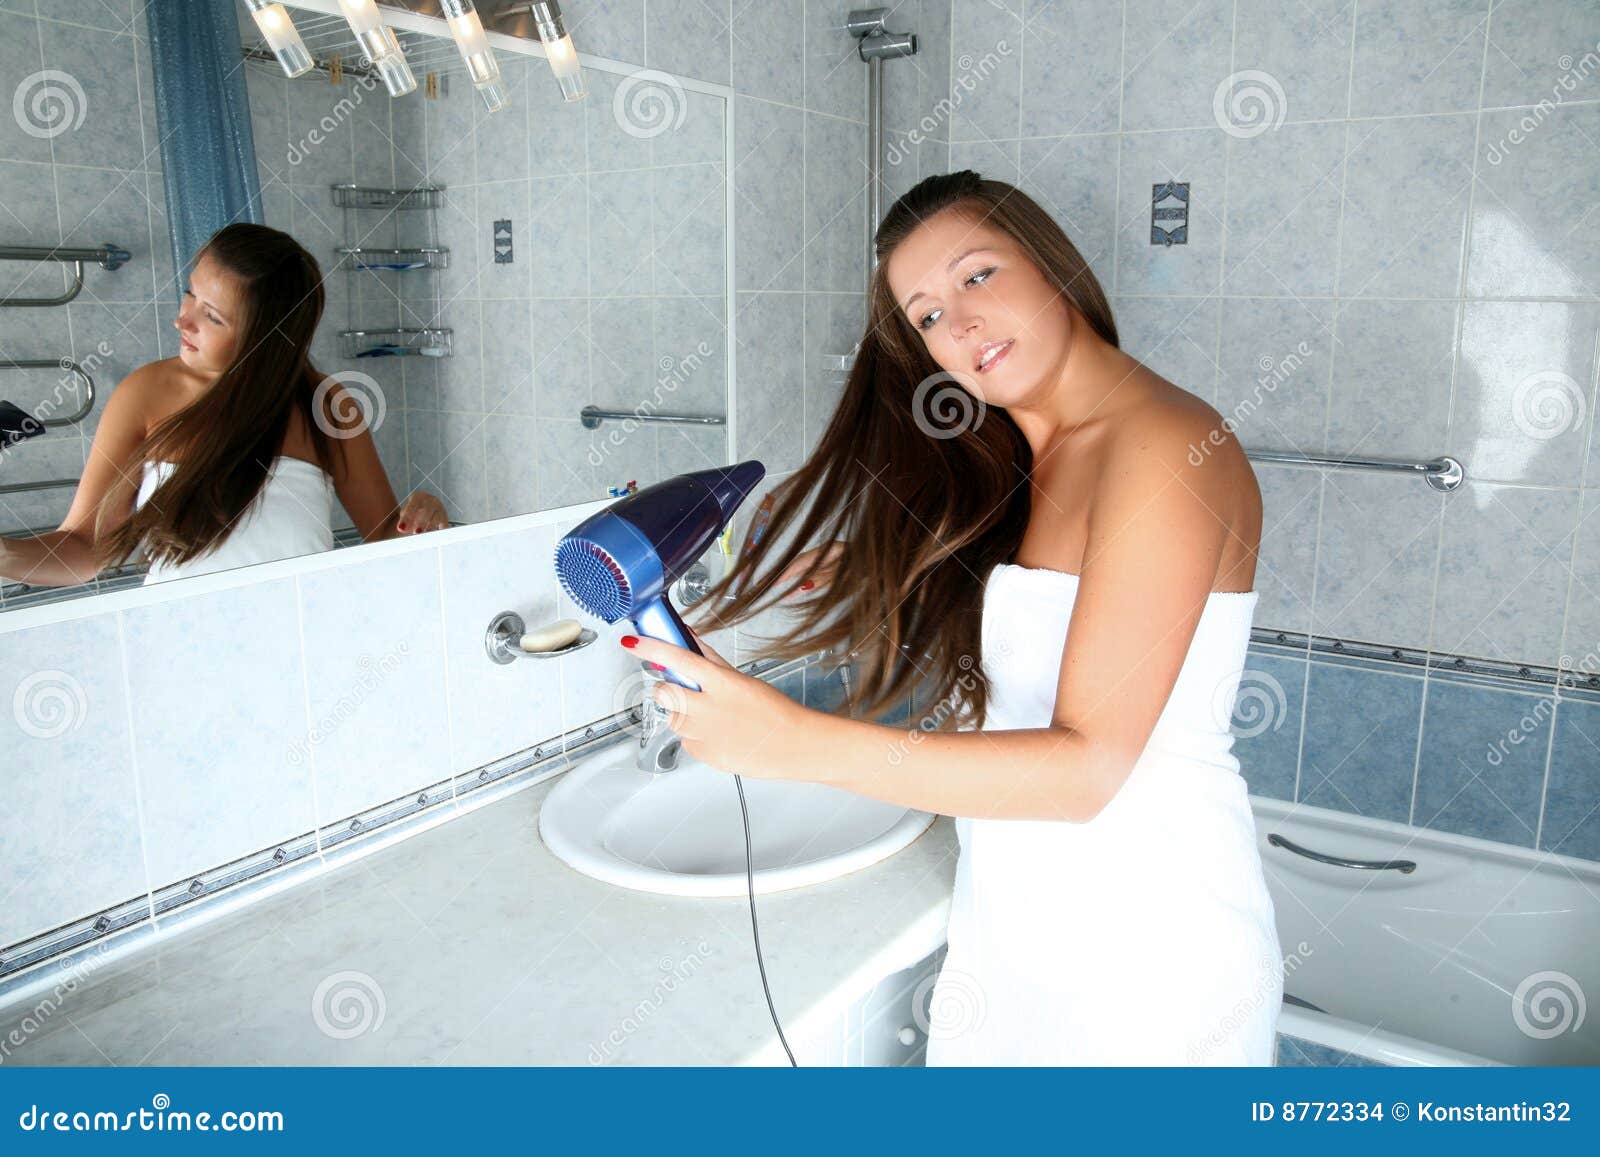 Girls In Bathroom Pics